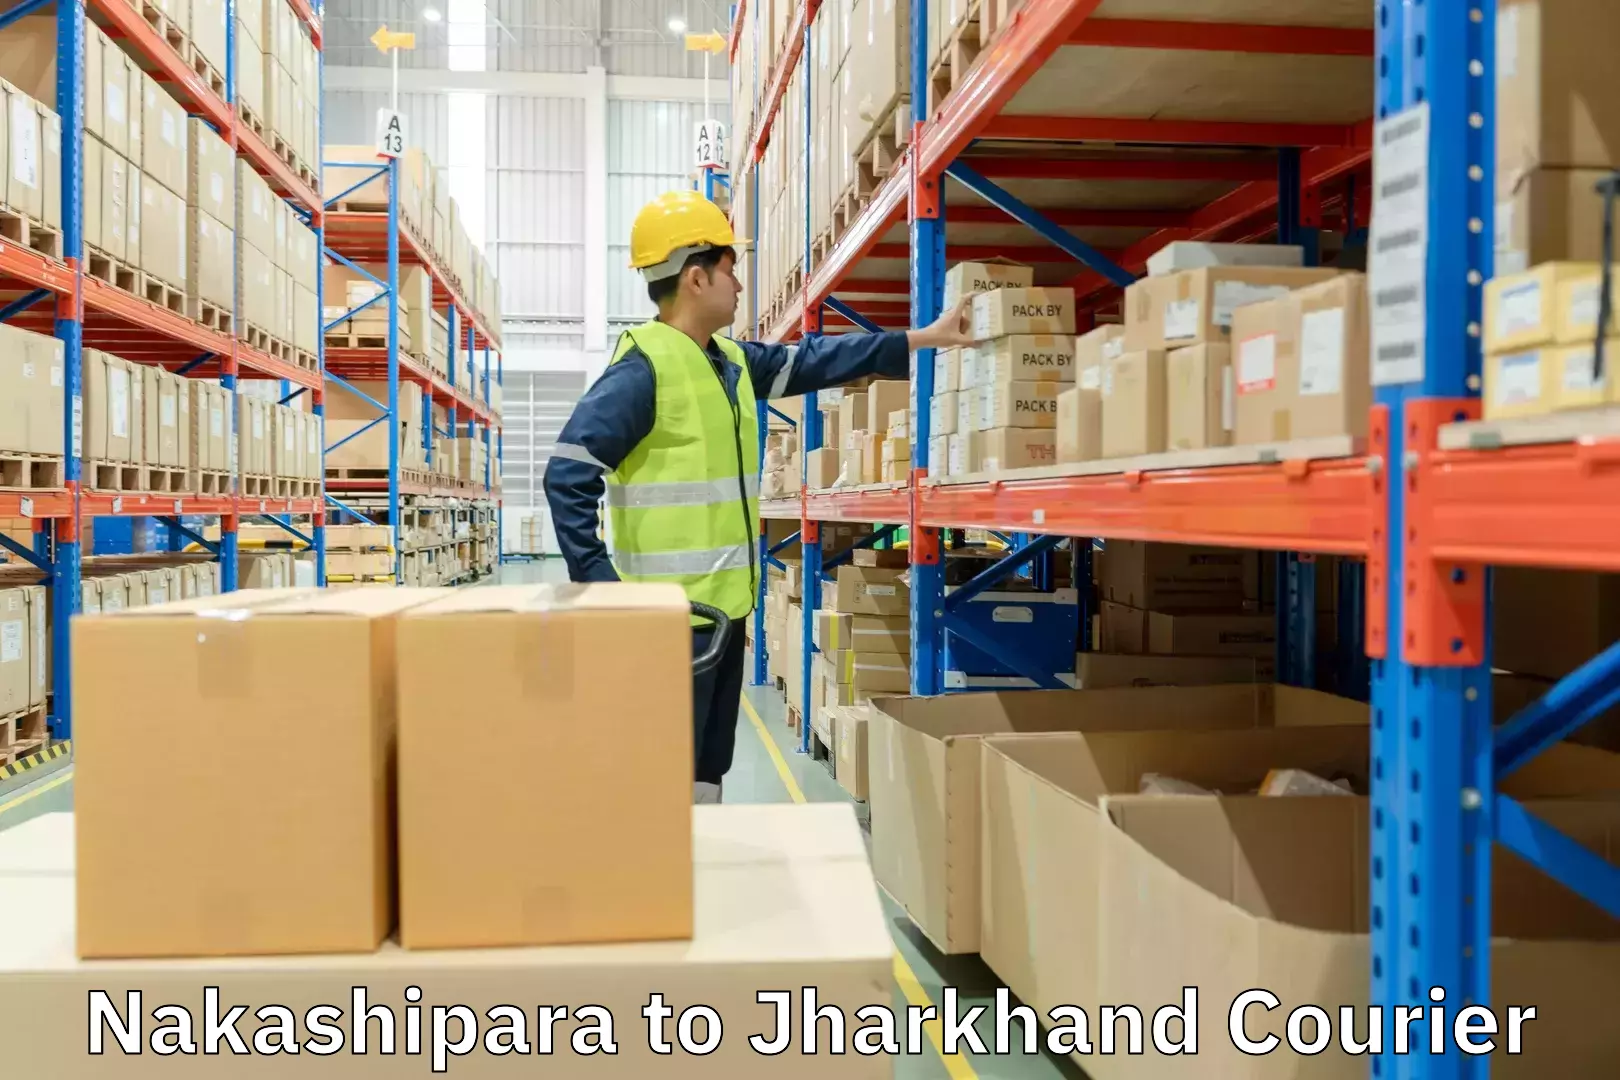 Express delivery capabilities Nakashipara to Jharkhand